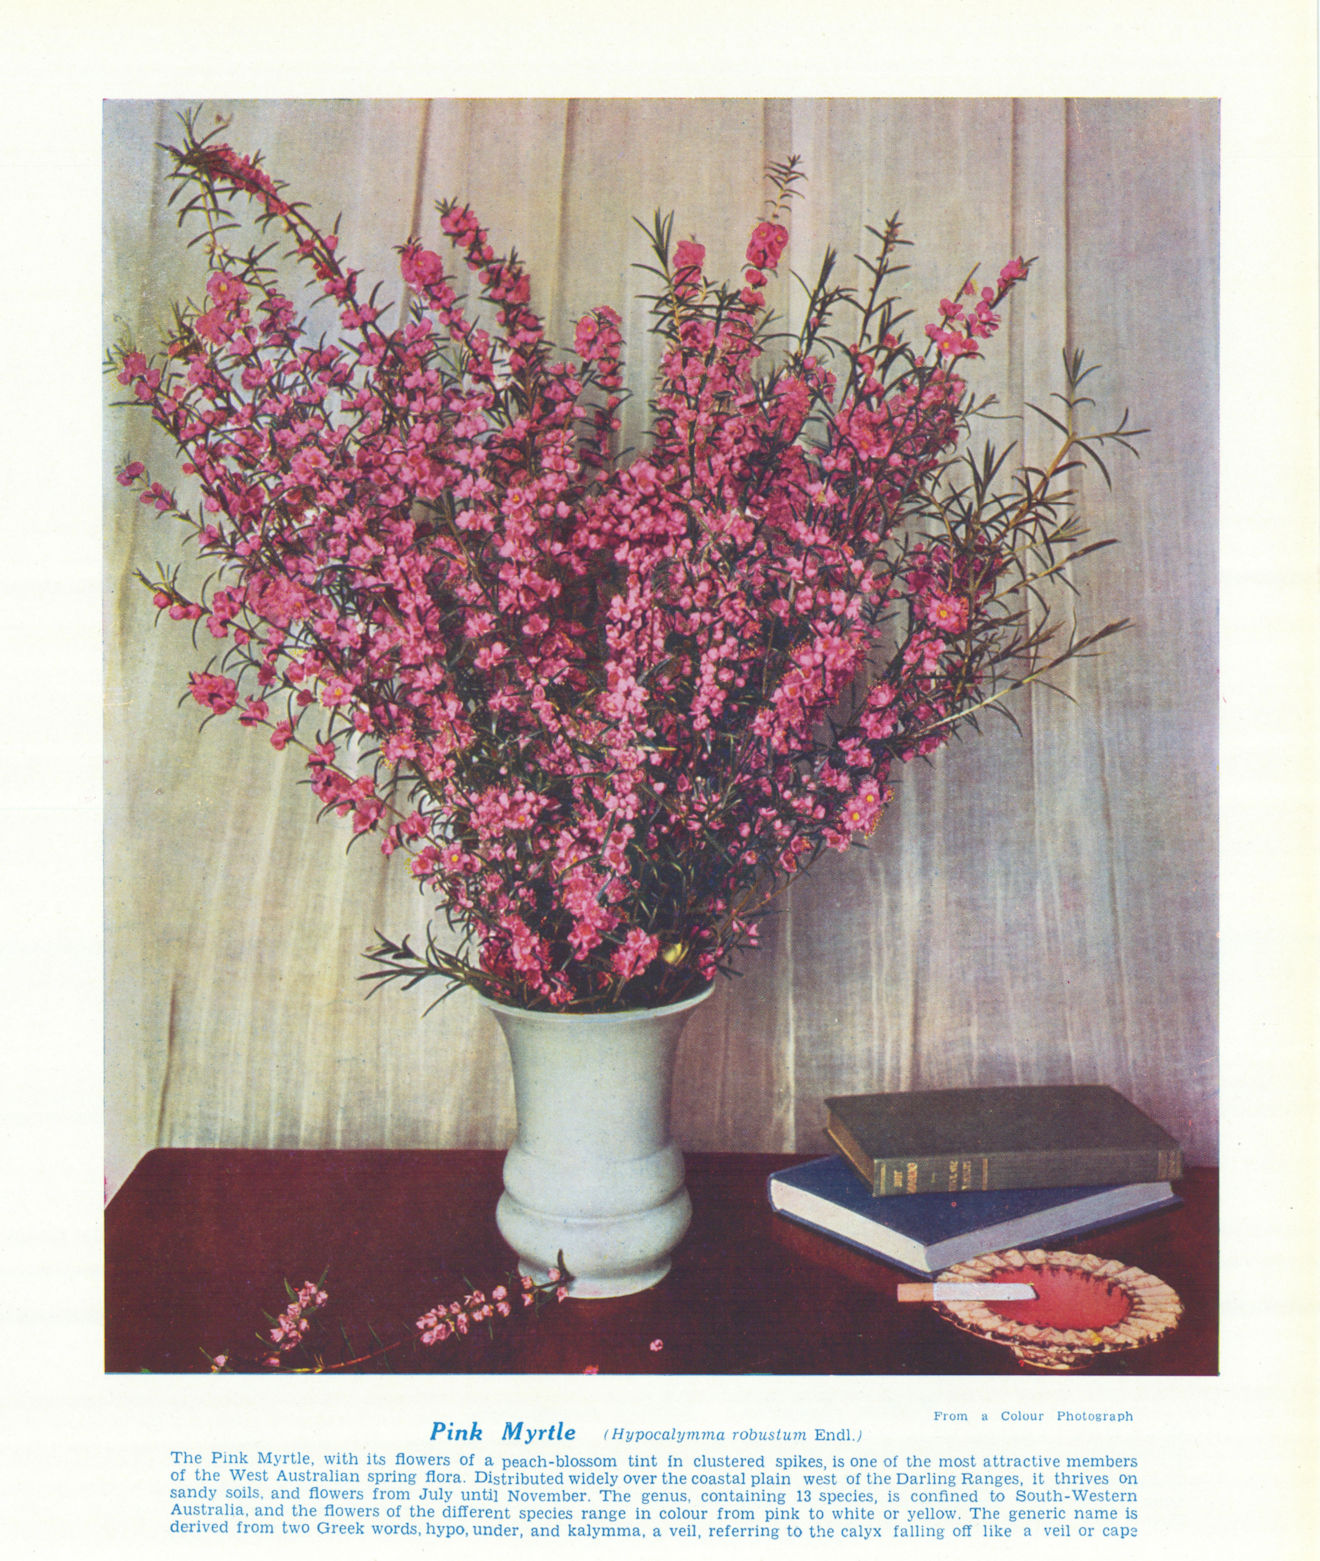 Associate Product Pink Myrtle (Hypocalymma robustum). West Australian Wild Flowers 1950 print